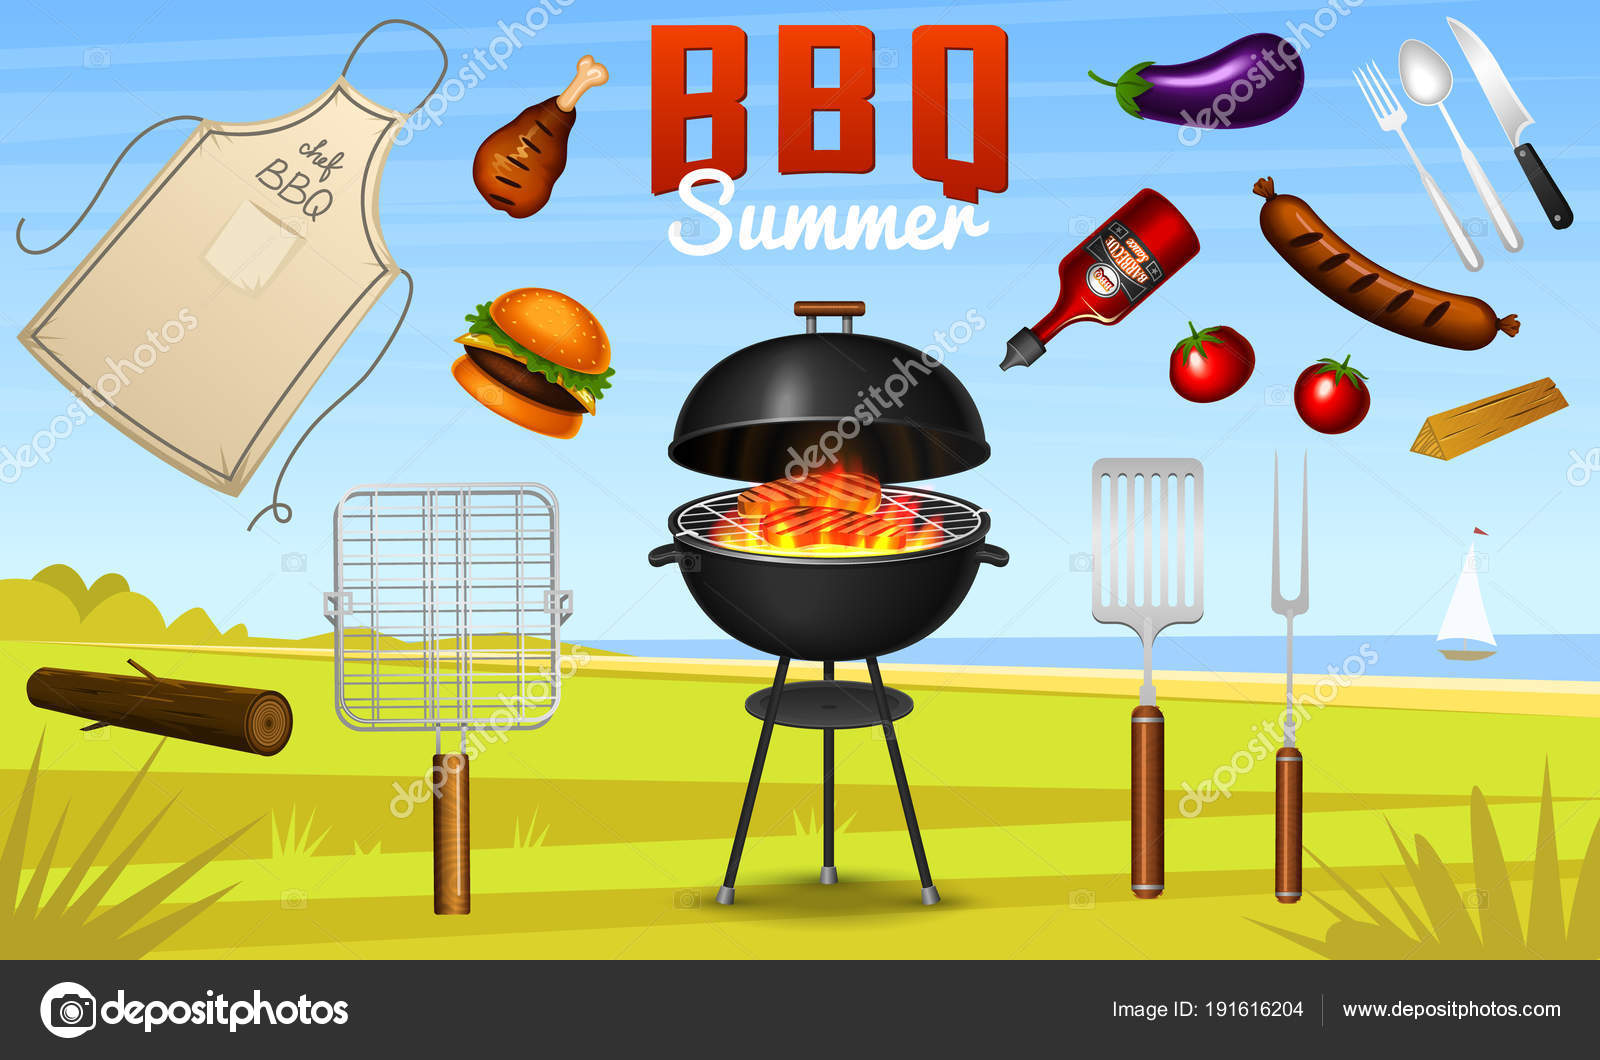 https://st3.depositphotos.com/9771418/19161/v/1600/depositphotos_191616204-stock-illustration-barbecue-grill-elements-set-isolated.jpg